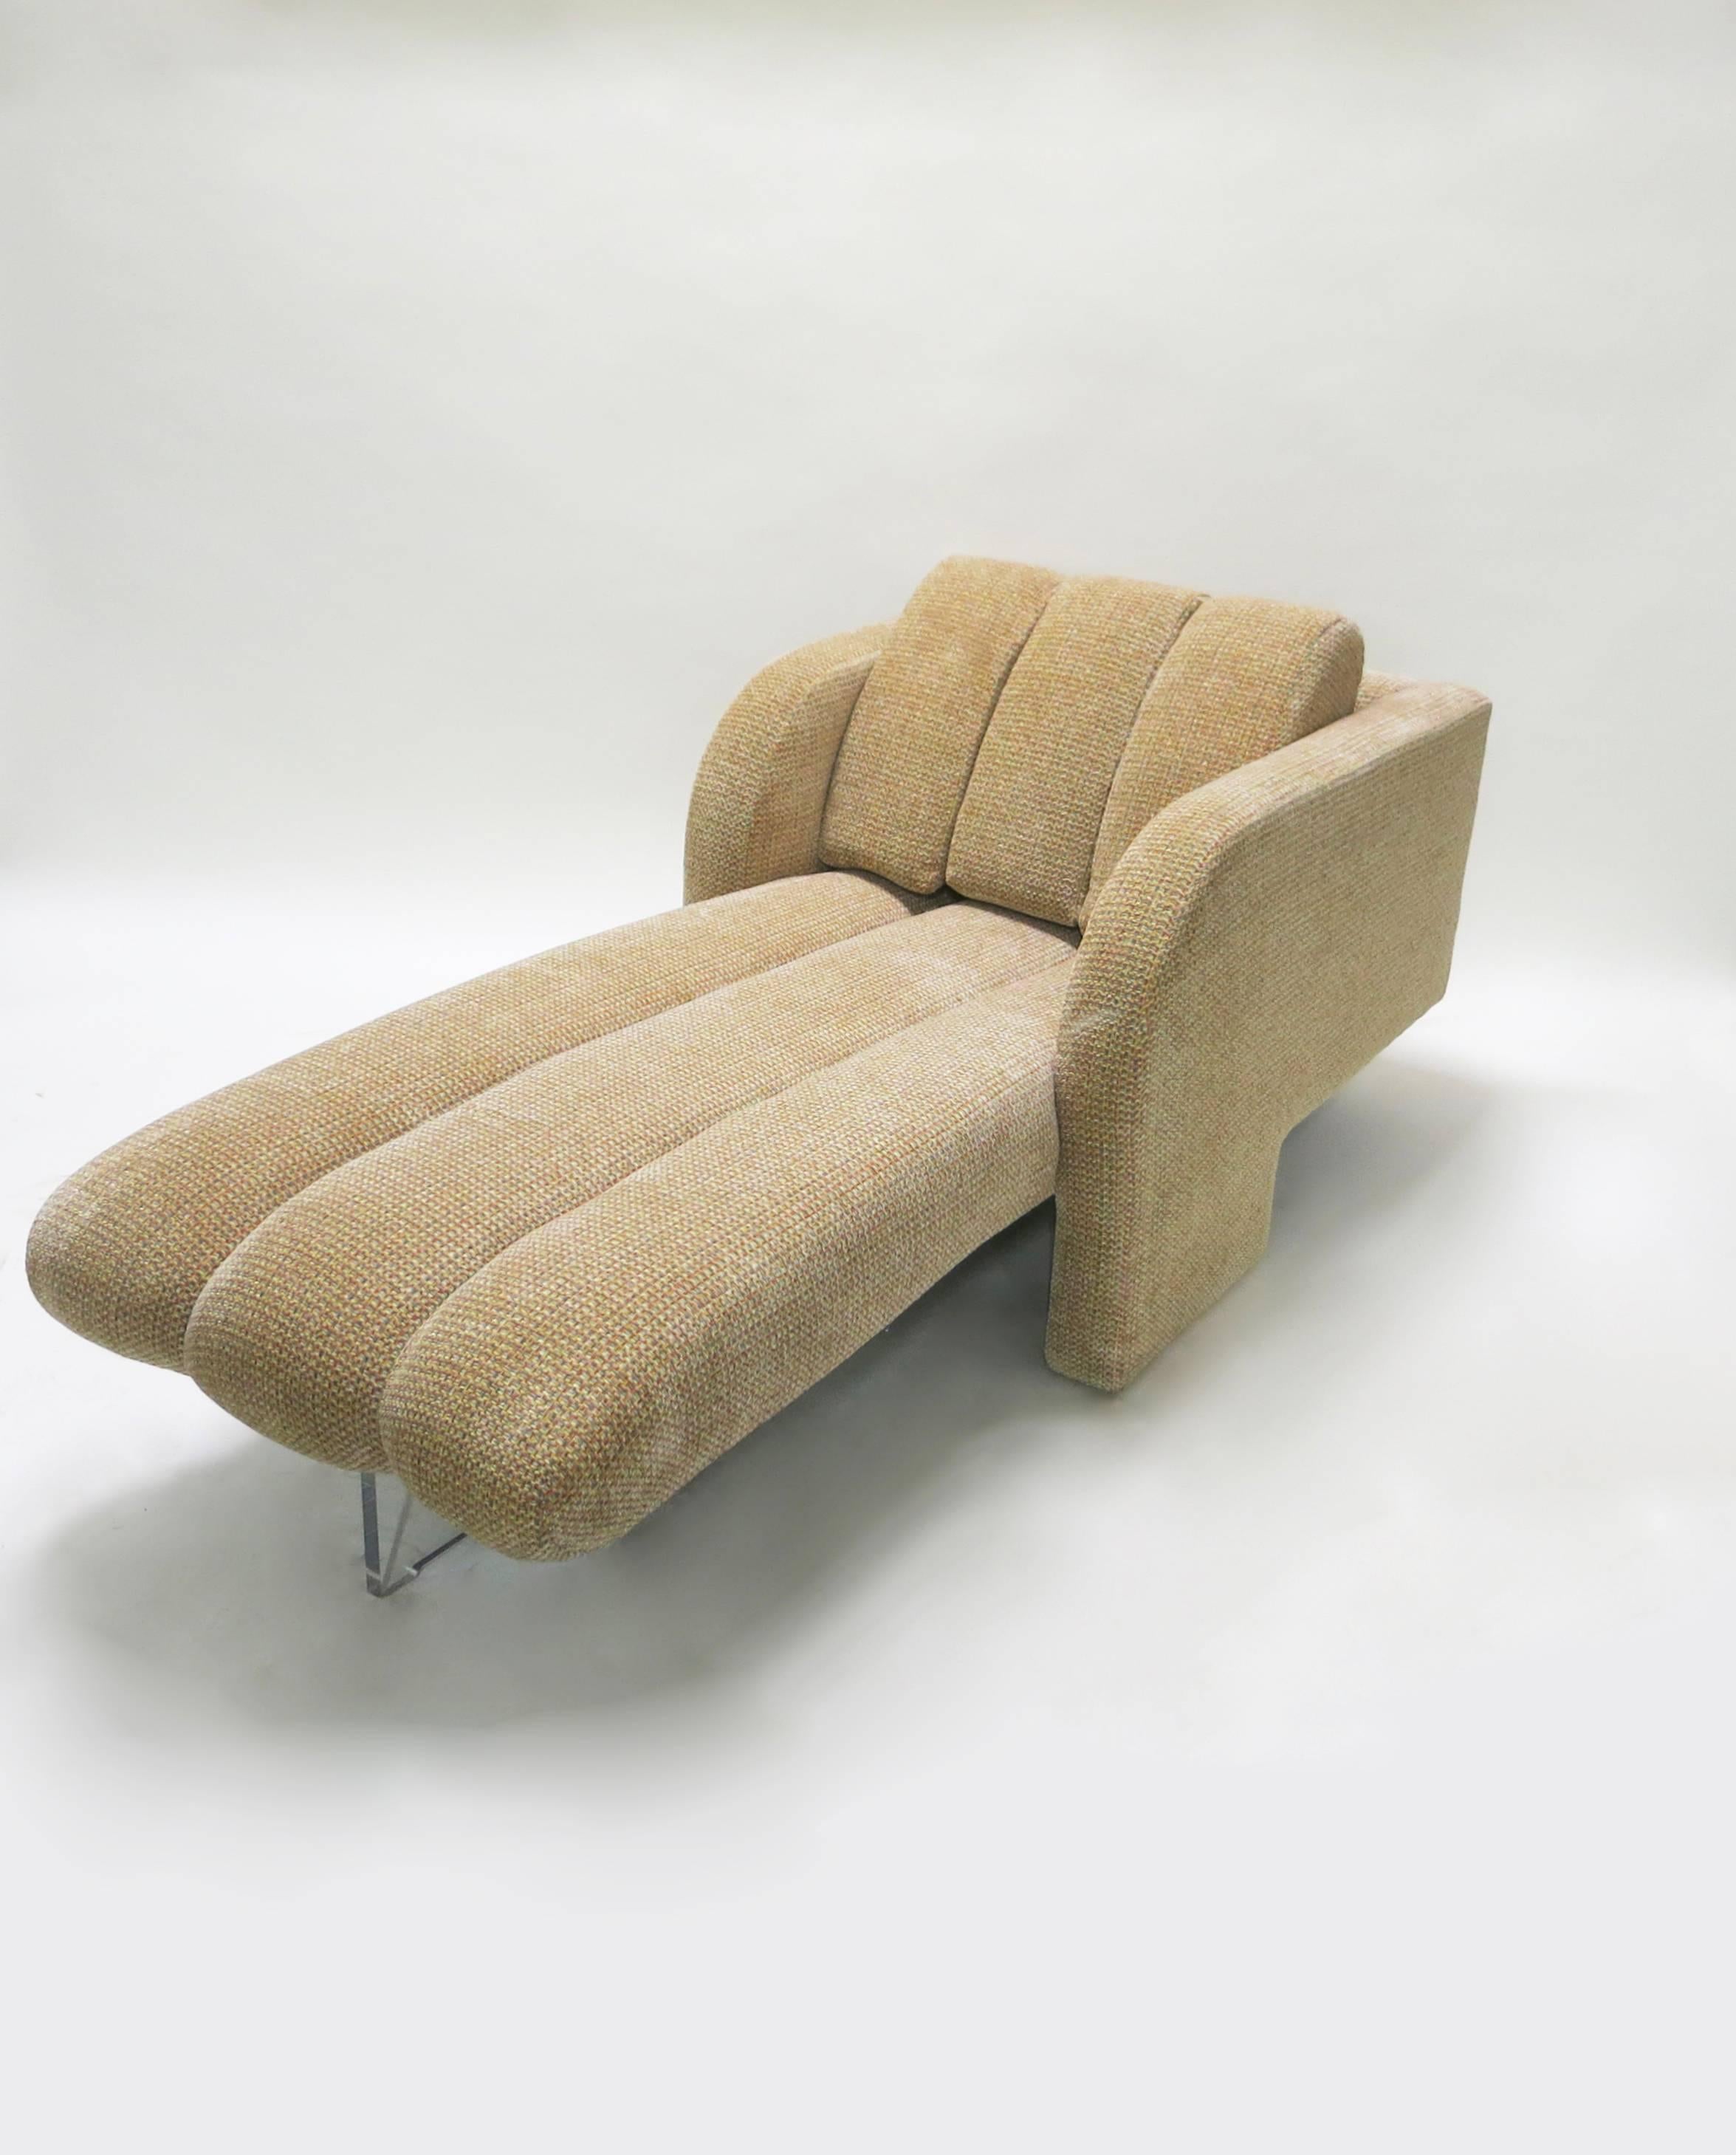 American Chaise Longue / Lounge Chair by Vladimir Kagan, USA 1970s